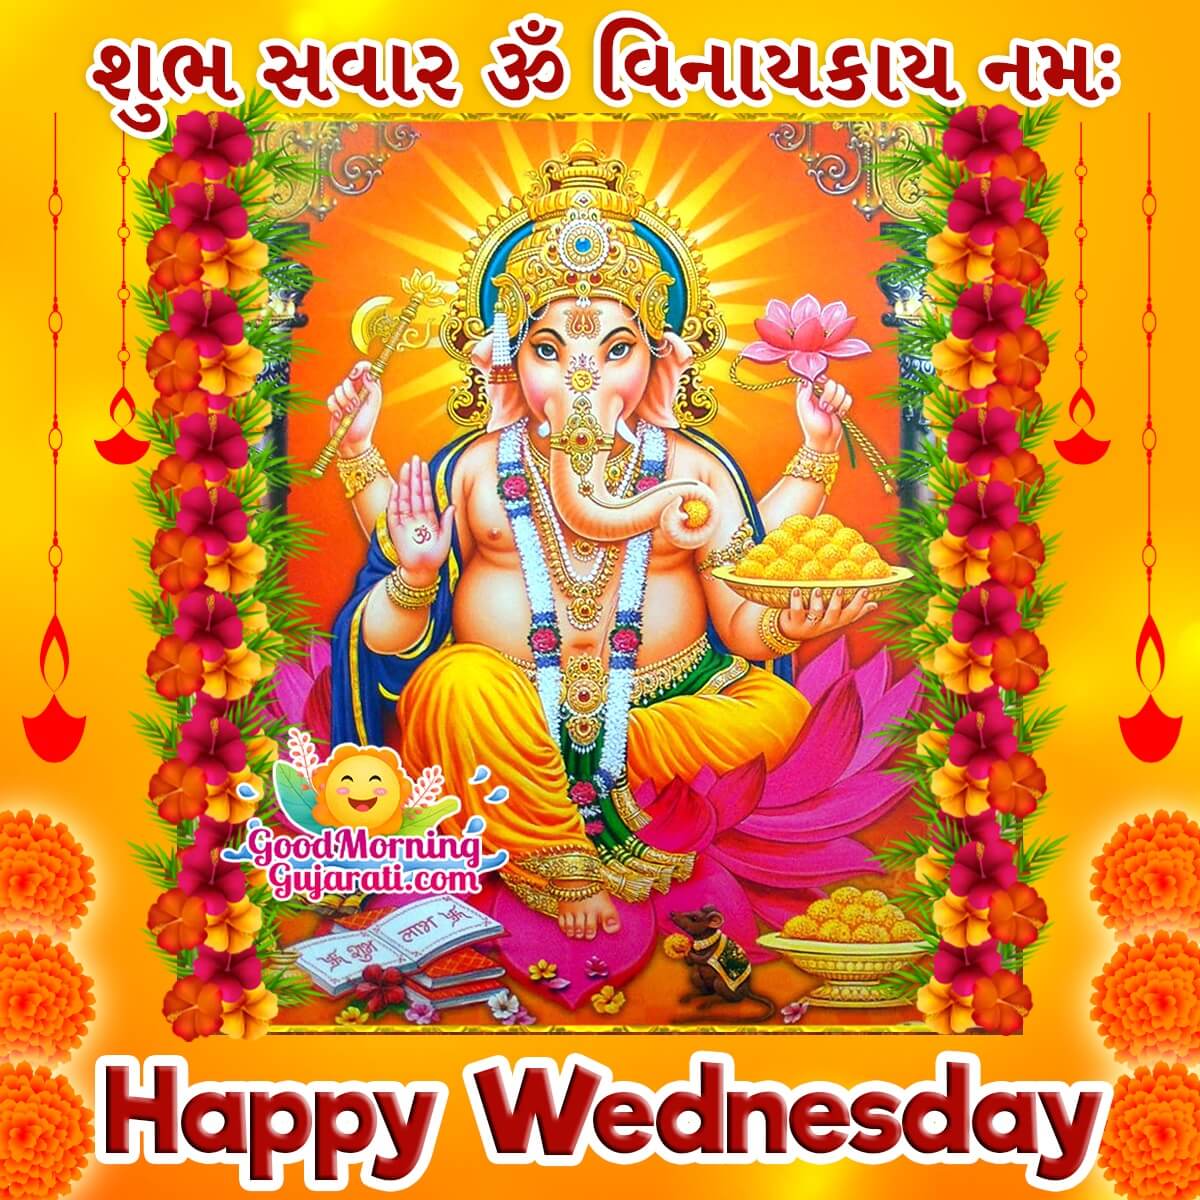 Wednesday Ganesha Good Morning Images in Gujarati - Good Morning ...